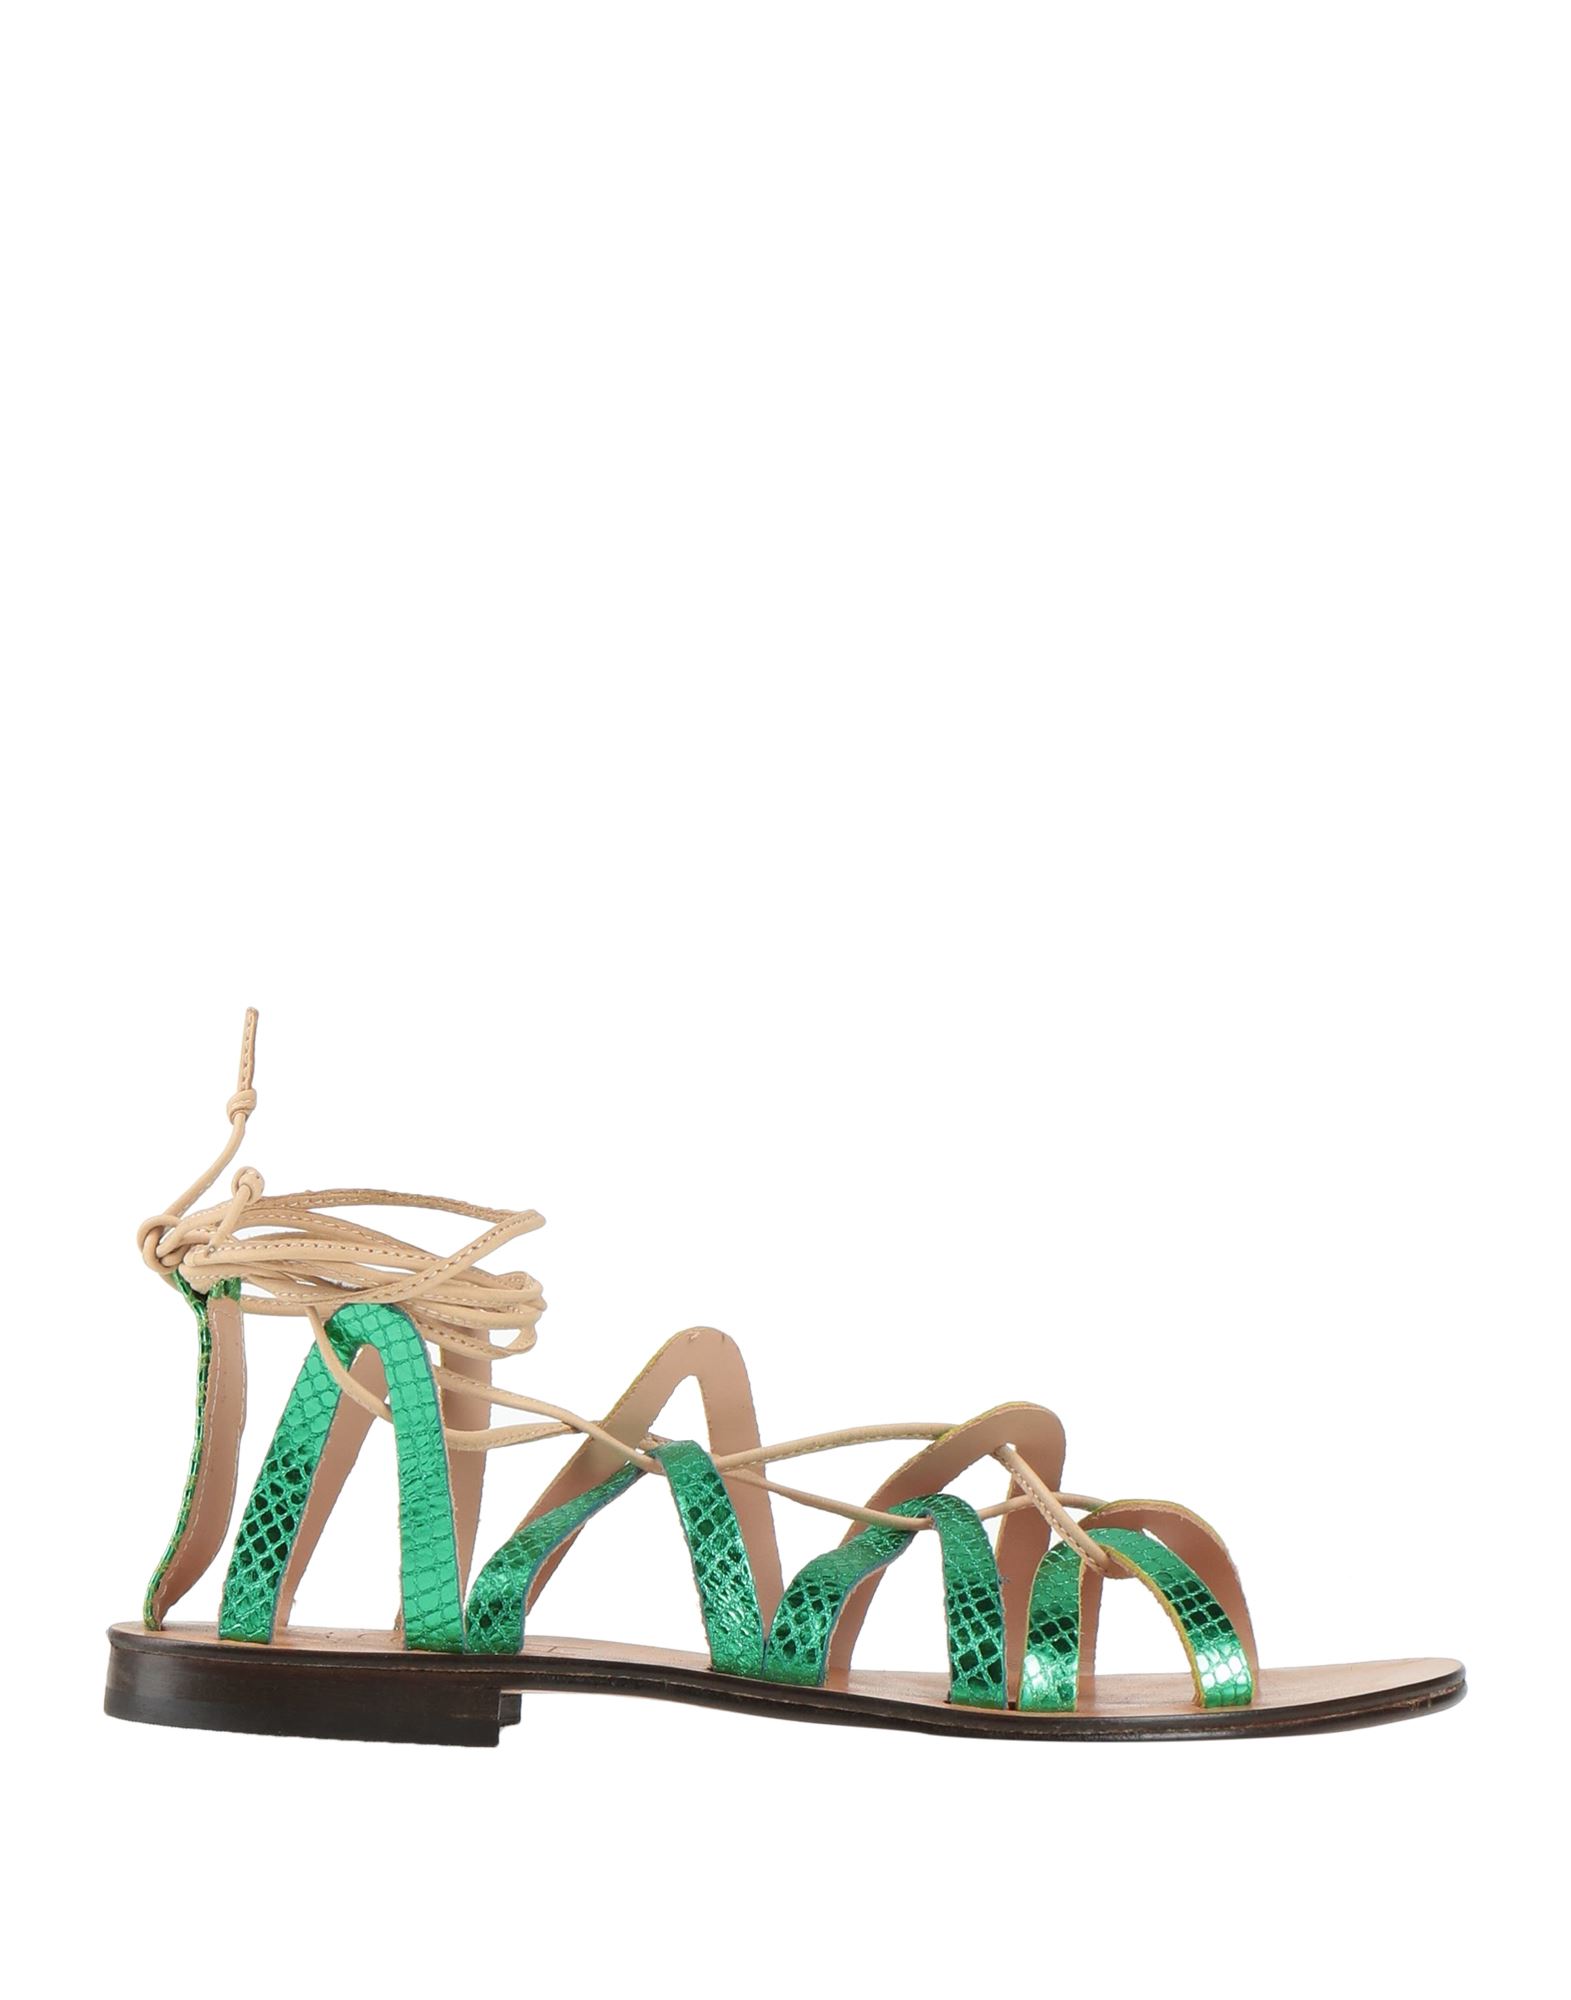 Solemaria Sandals In Green